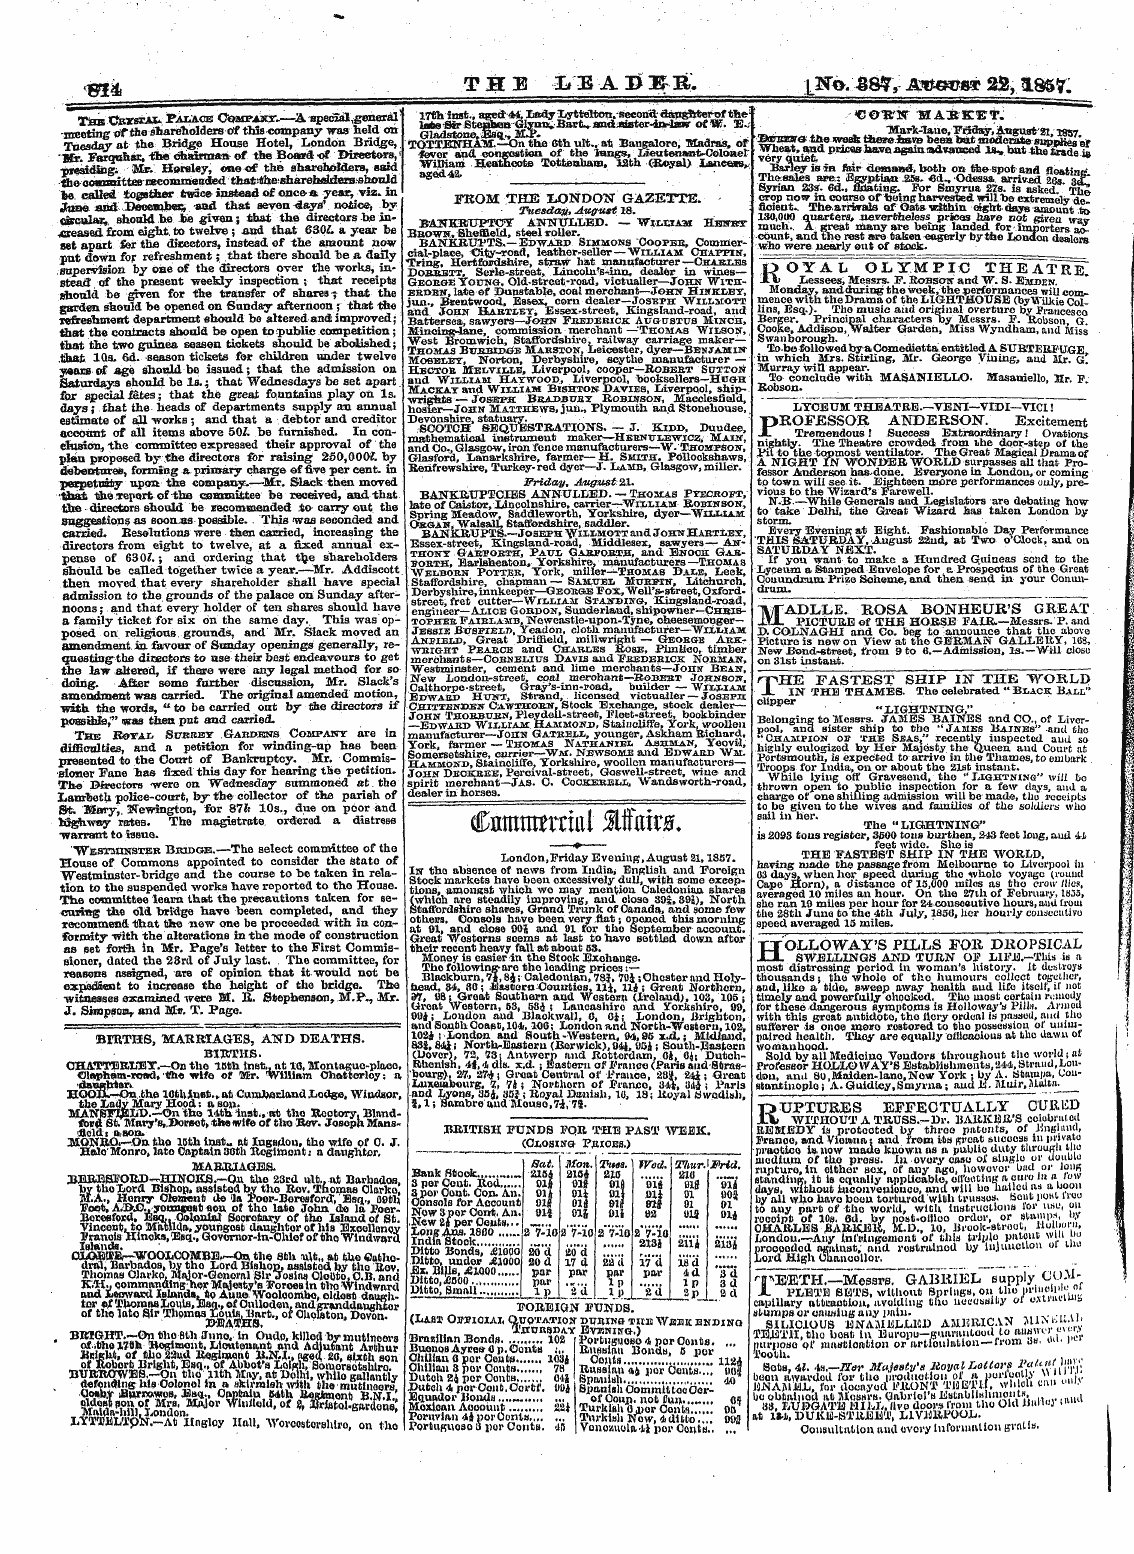 Leader (1850-1860): jS F Y, 2nd edition - Ikomthe 1london Gazette. Tuesday., Auffi...